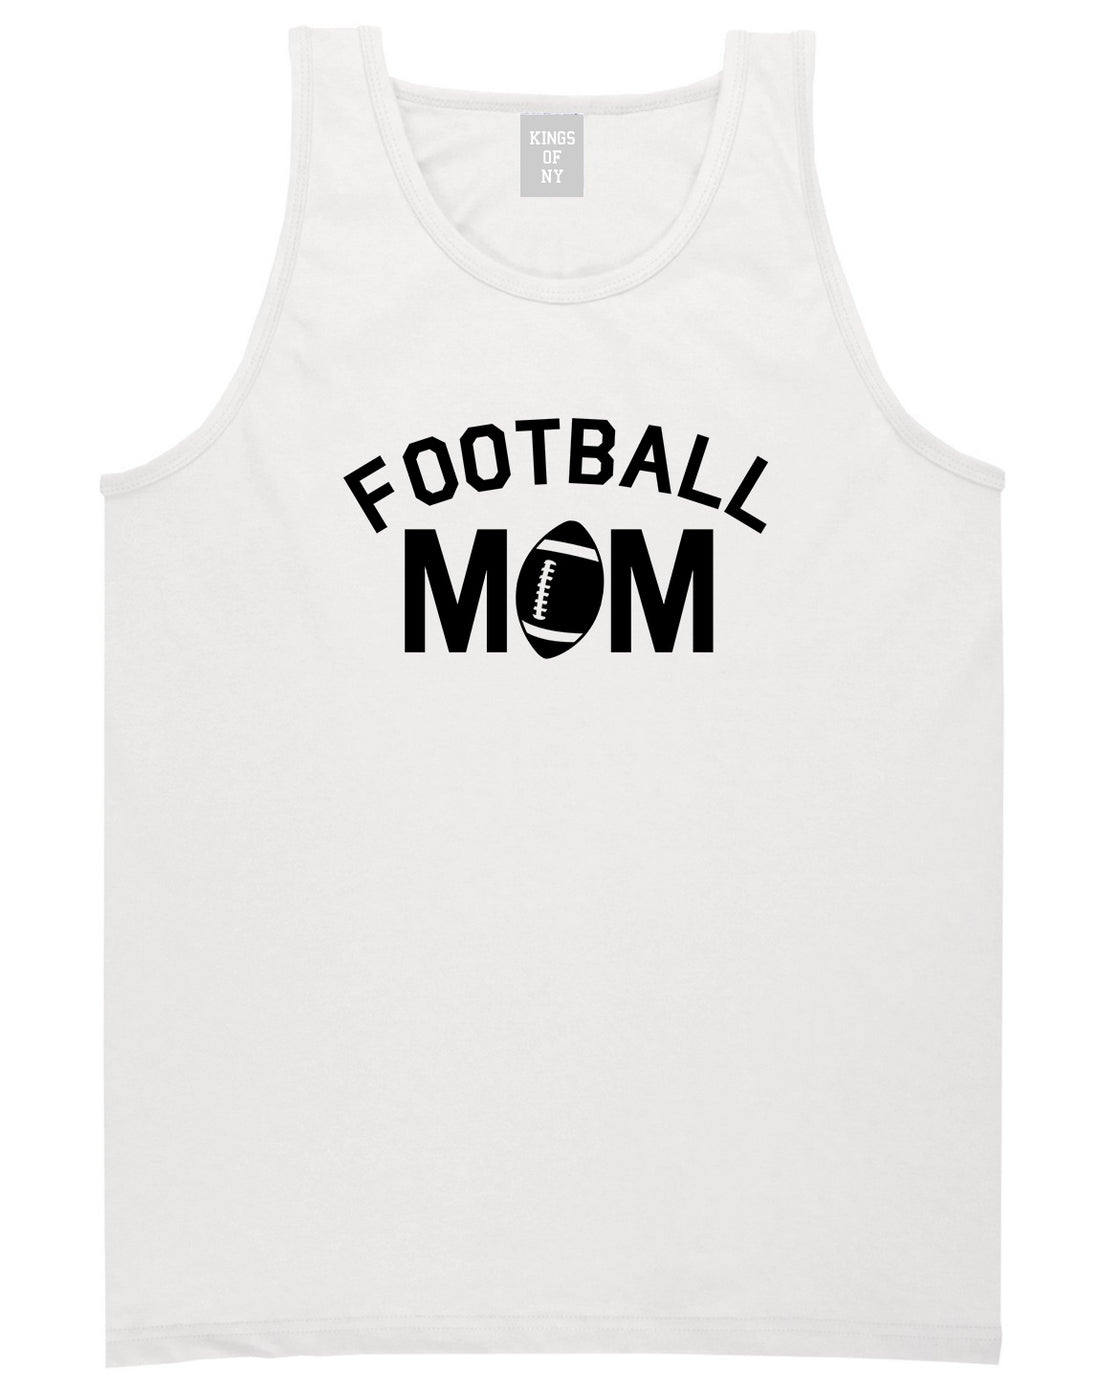 Football Mom Sports Mens White Tank Top Shirt by KINGS OF NY